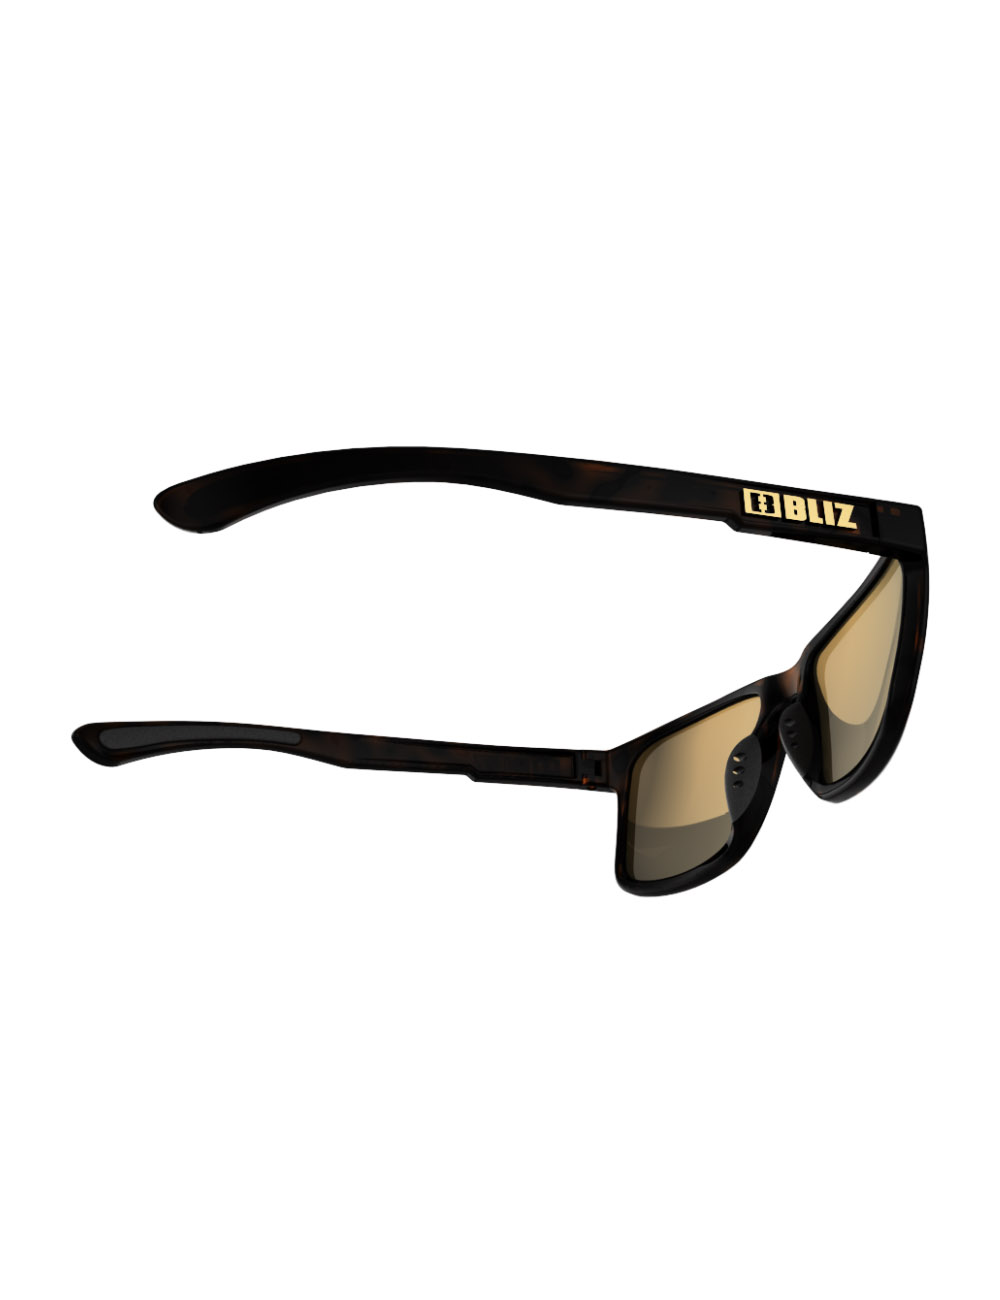 BLIZ Спортивные очки c поляризованными линзами LUNA M11 Demi Brown Артикул: 54605-29